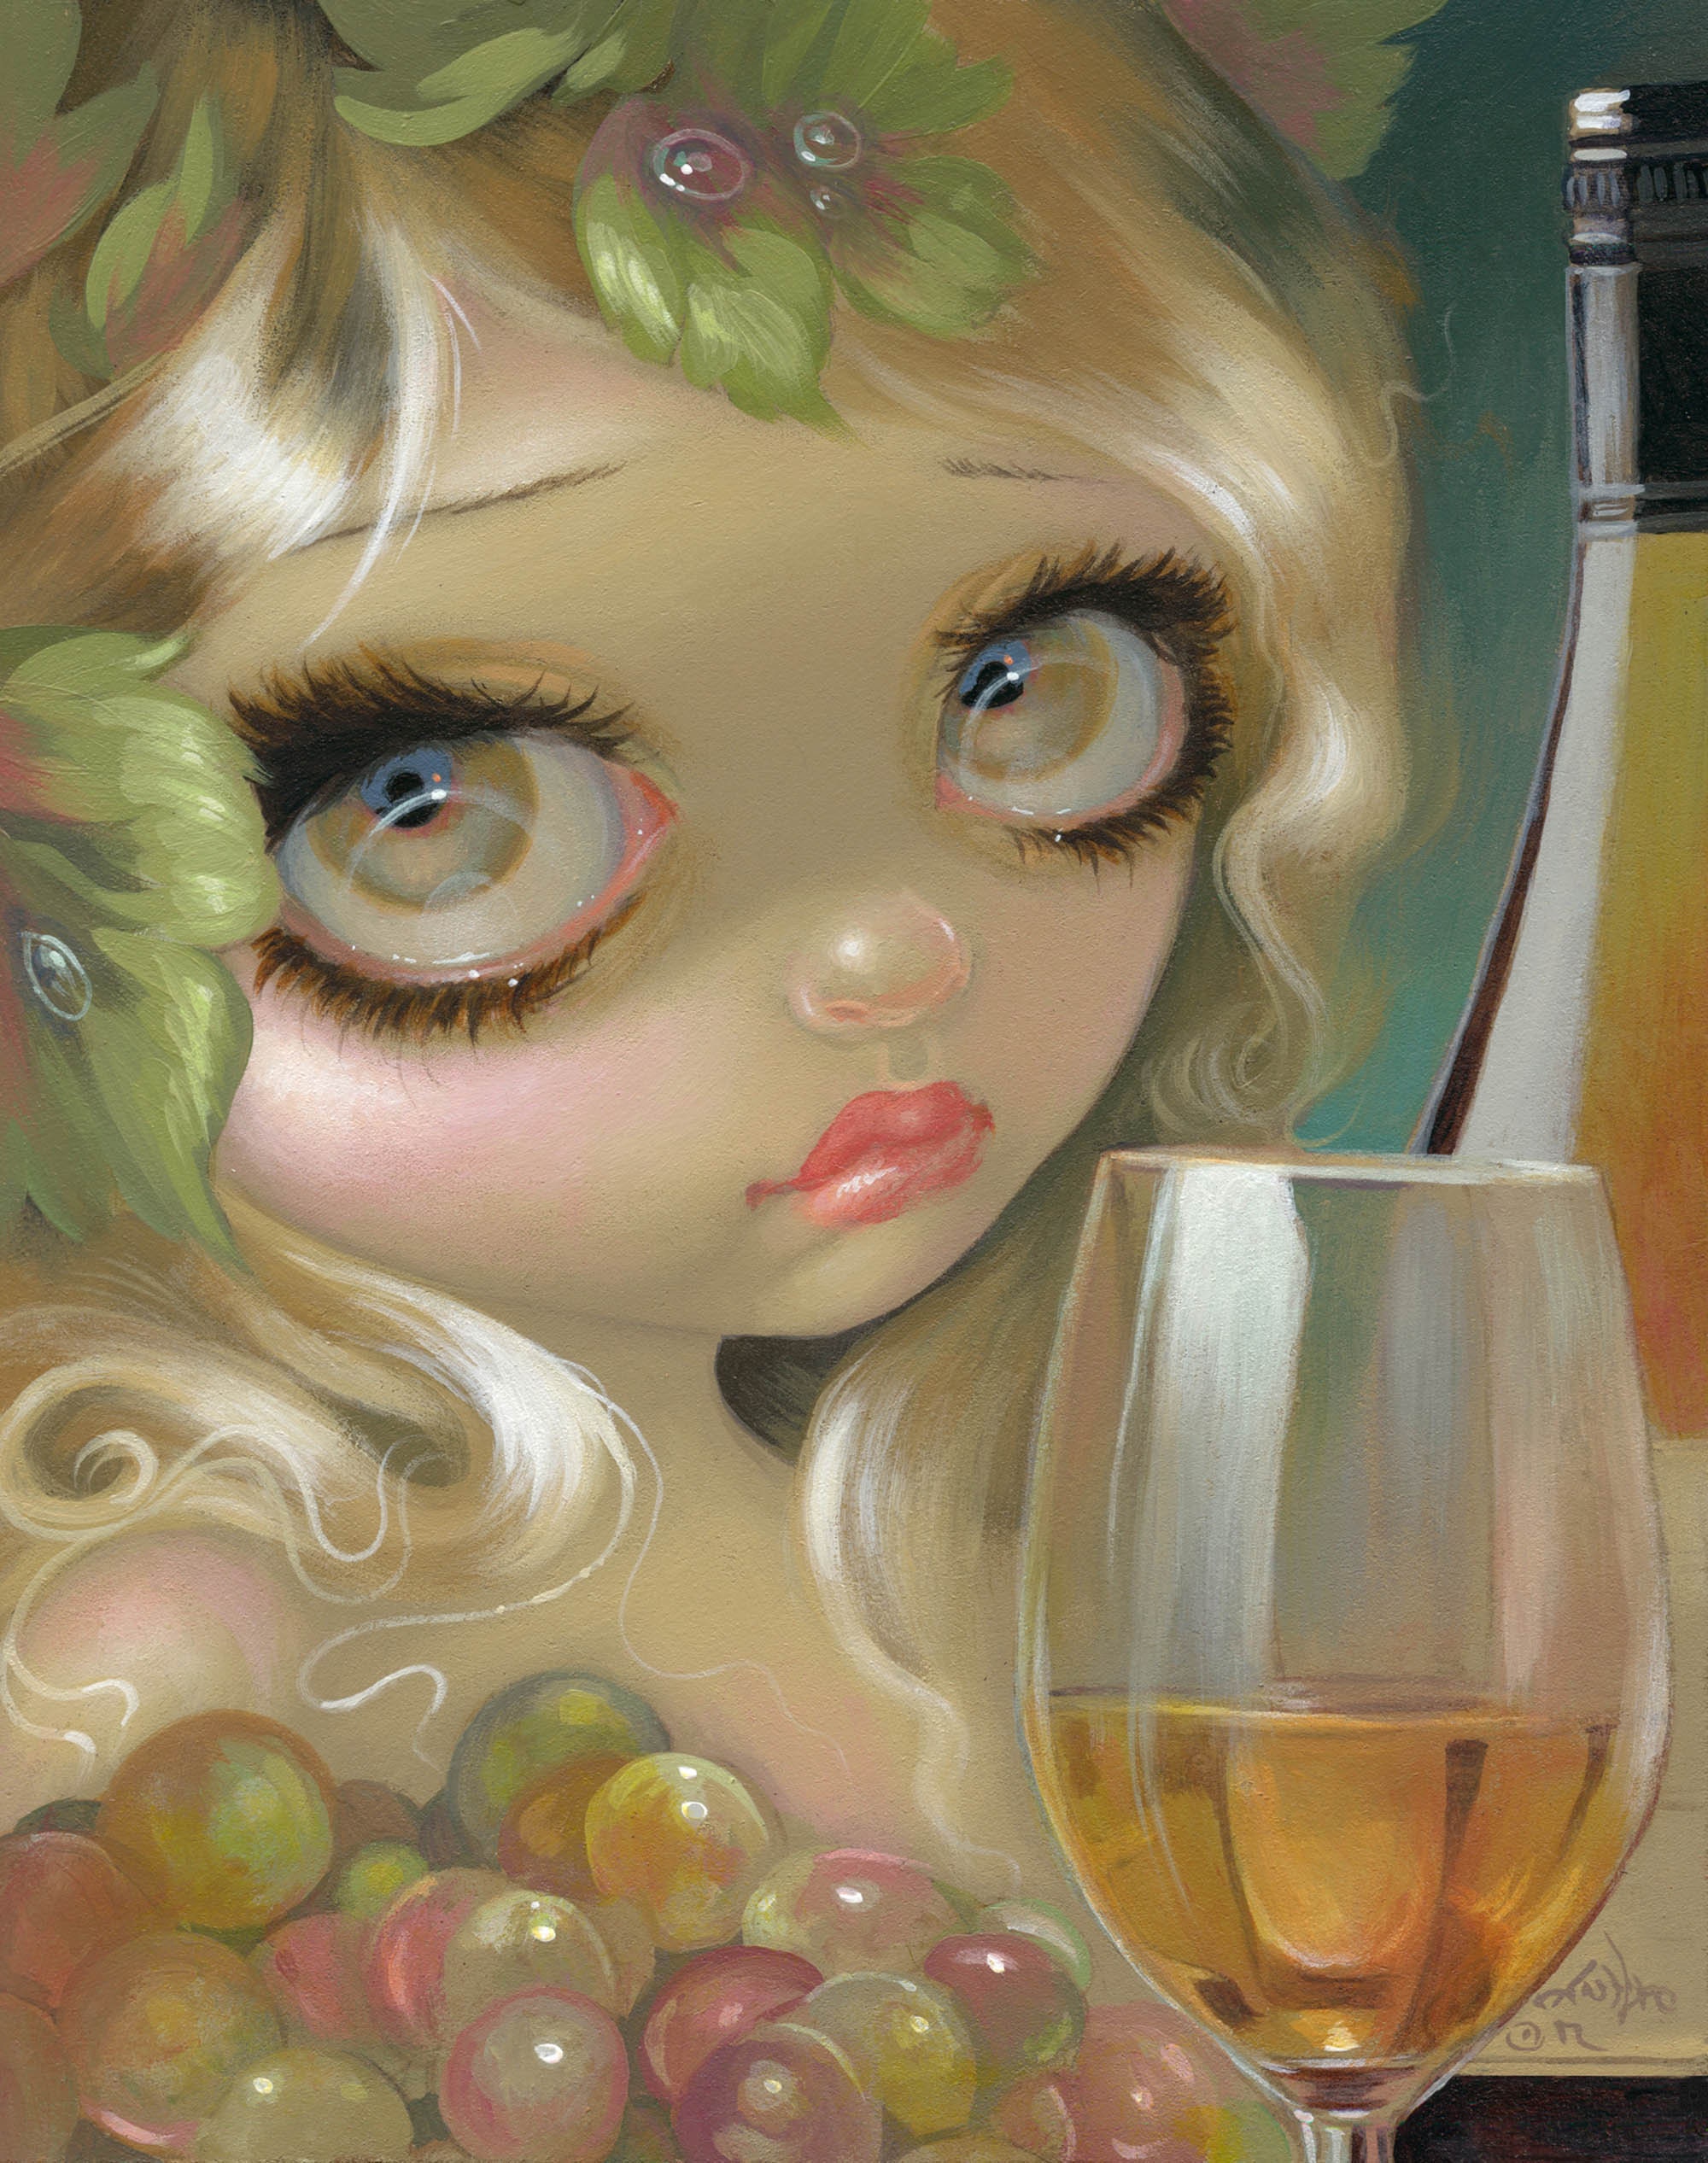 Spirits of the Vine Merlot Art Print by Jasmine Becket-Griffith Surreal Big Eye Girl Strangeling Alcohol Wine Illustration Poster A4 A3